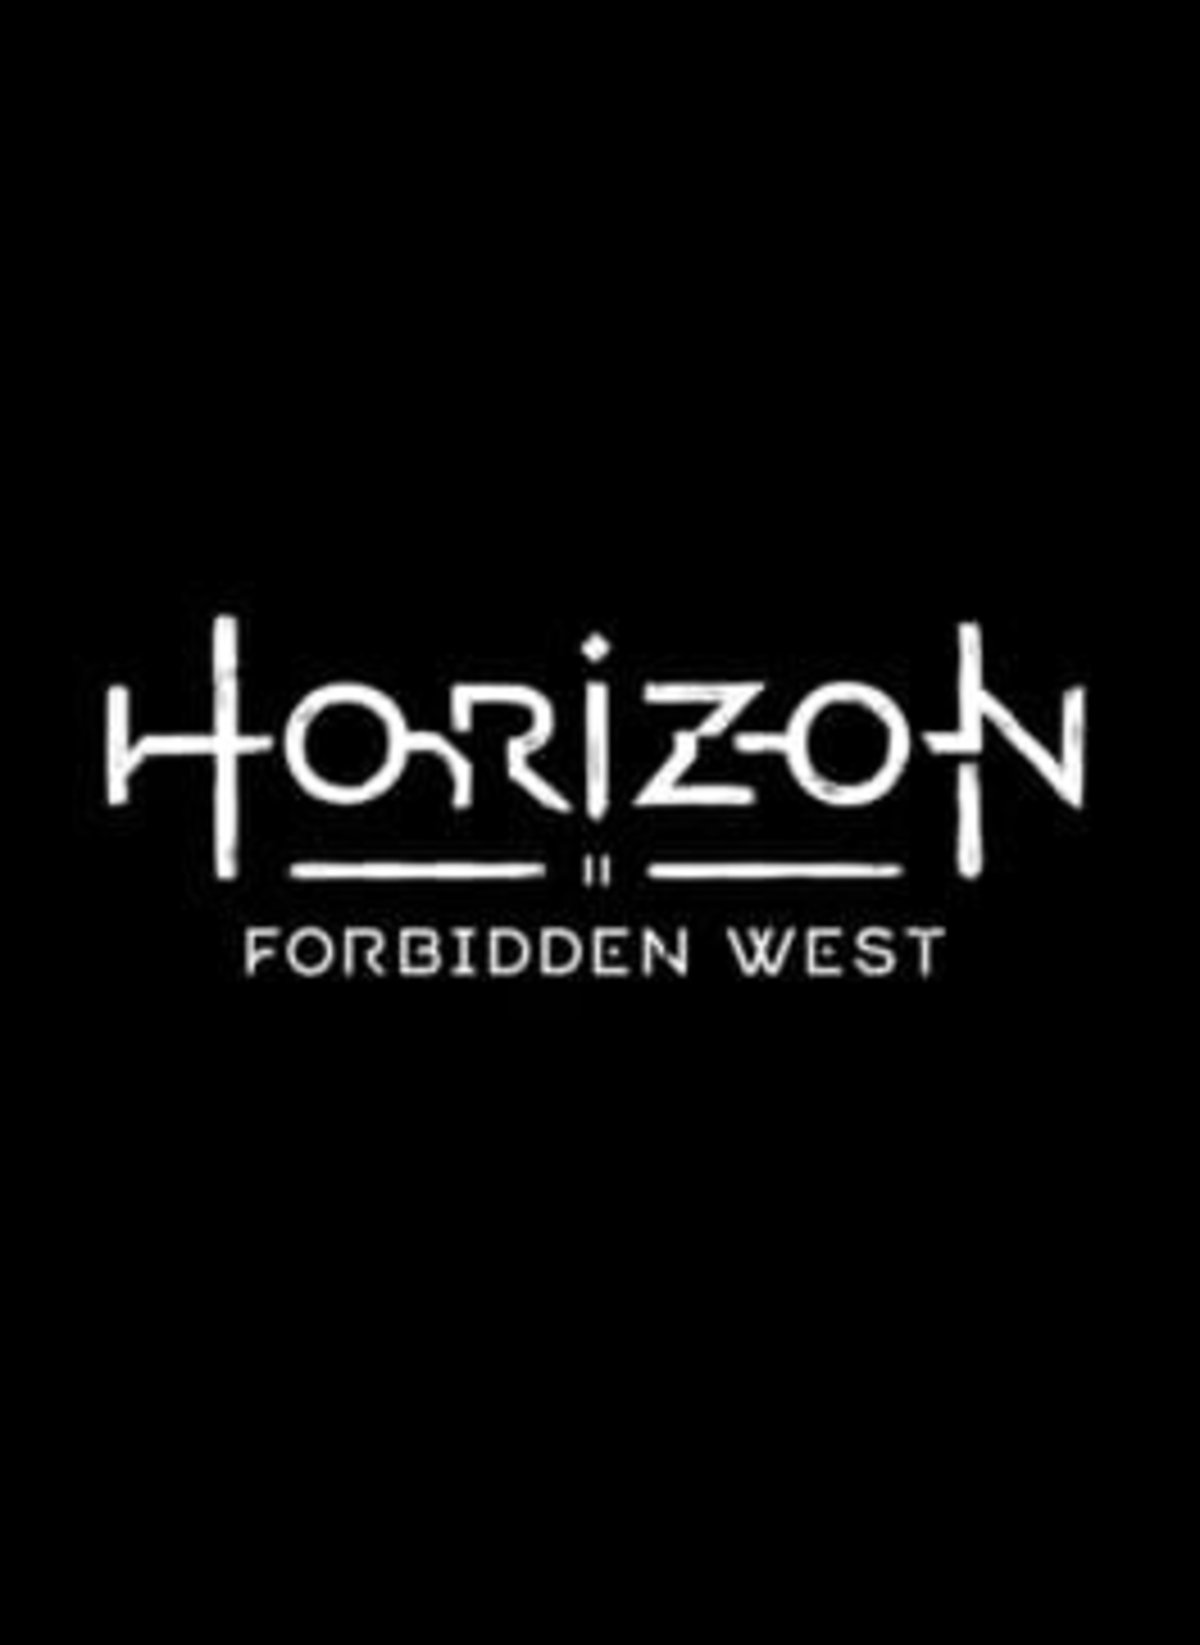 Horizon Forbidden West 20 percent off - book now!